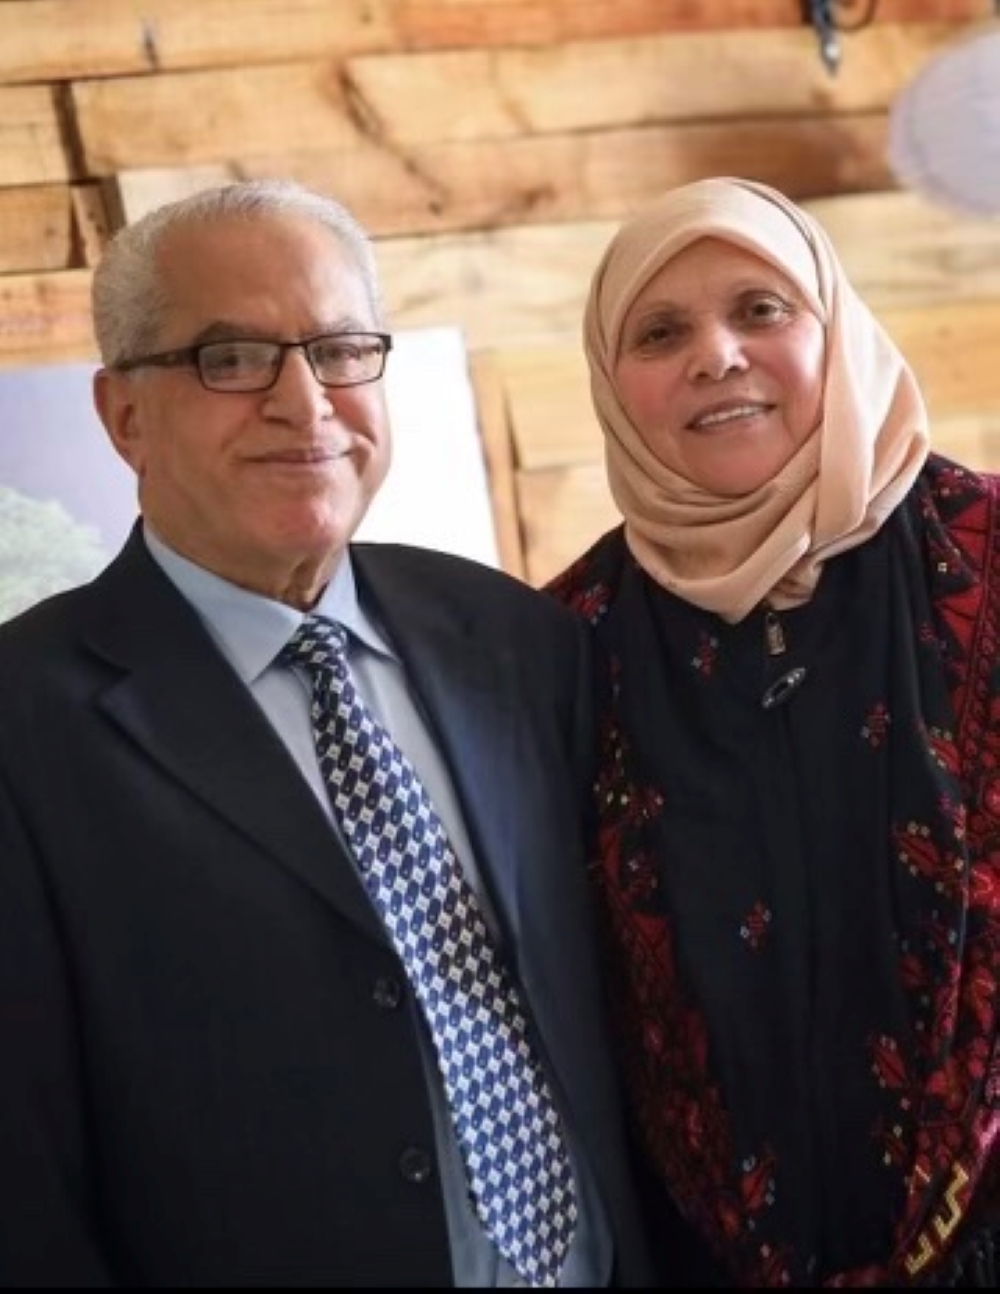 Hazem's mother Ayesha Alaaraj and Dr Ibrahim Alaaraj